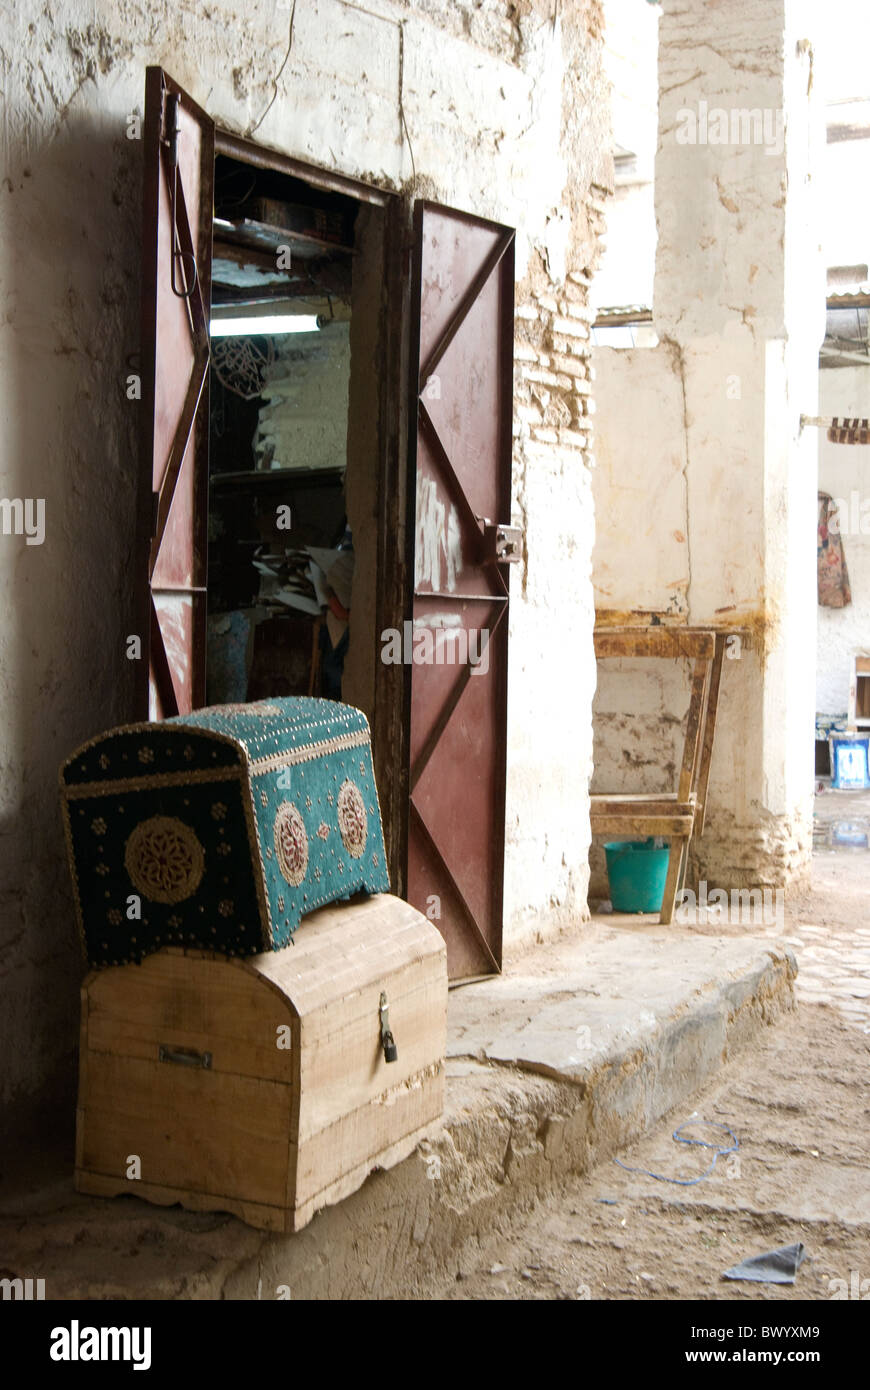 Medina (old city) of Fez, Morocco. Shop. Stock Photo